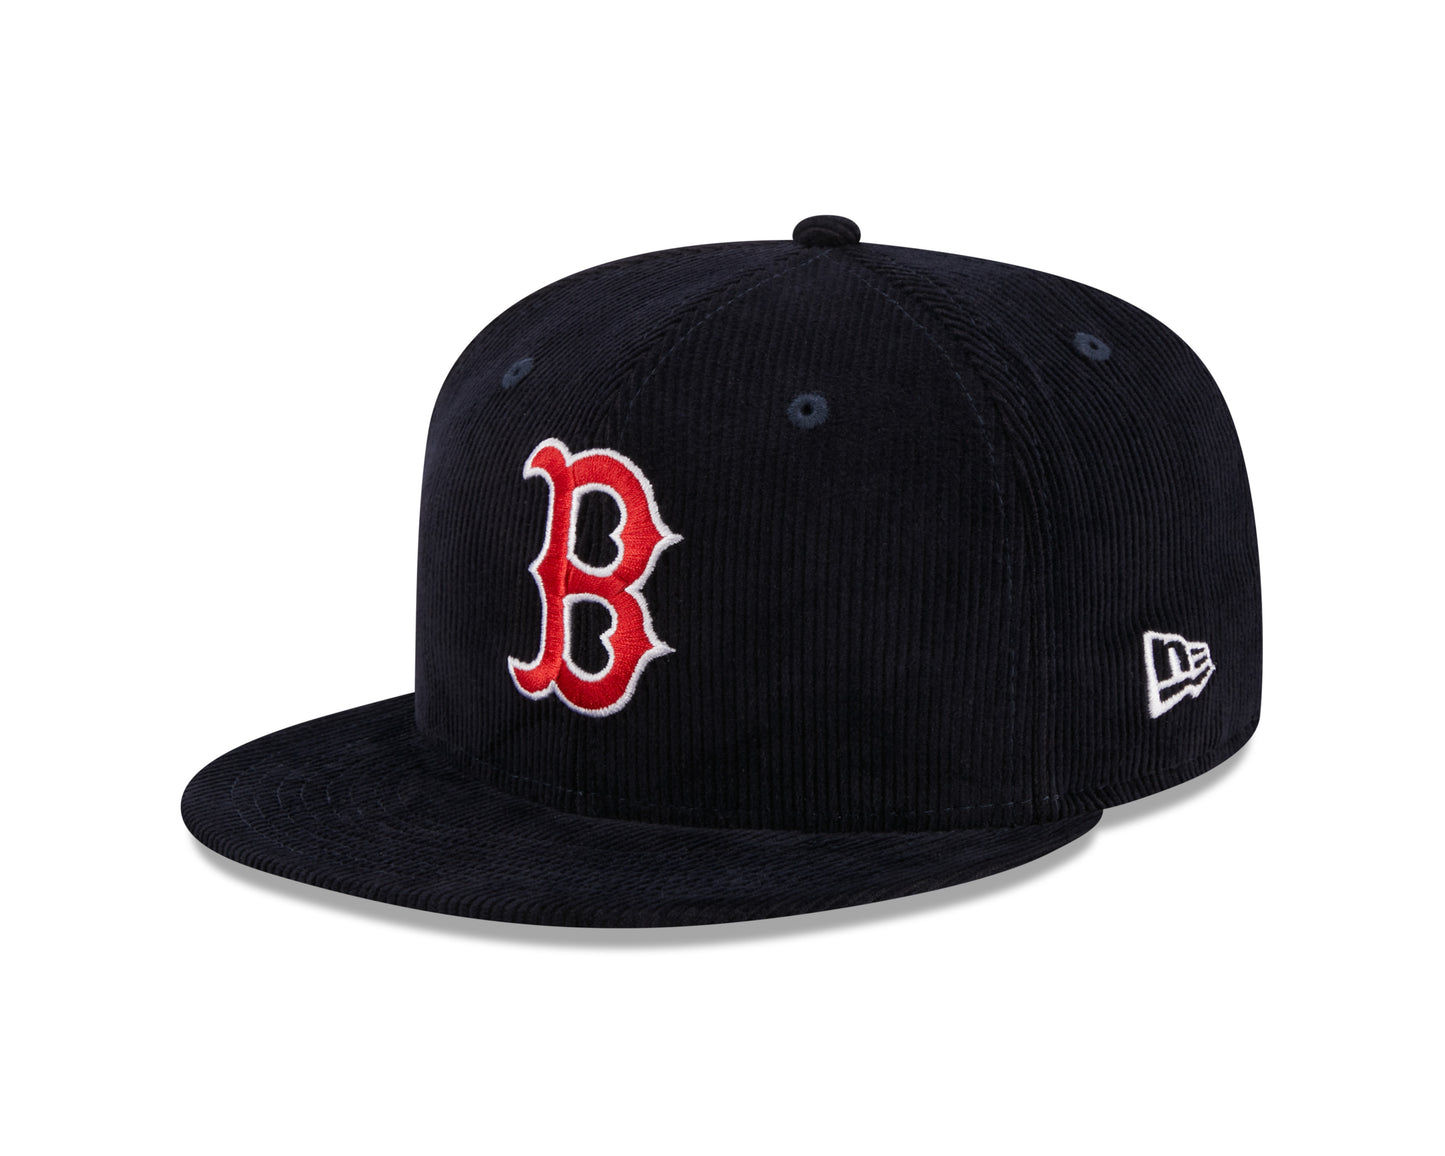 New Era - Boston Red Sox Throwback Cord - Navy - Headz Up 